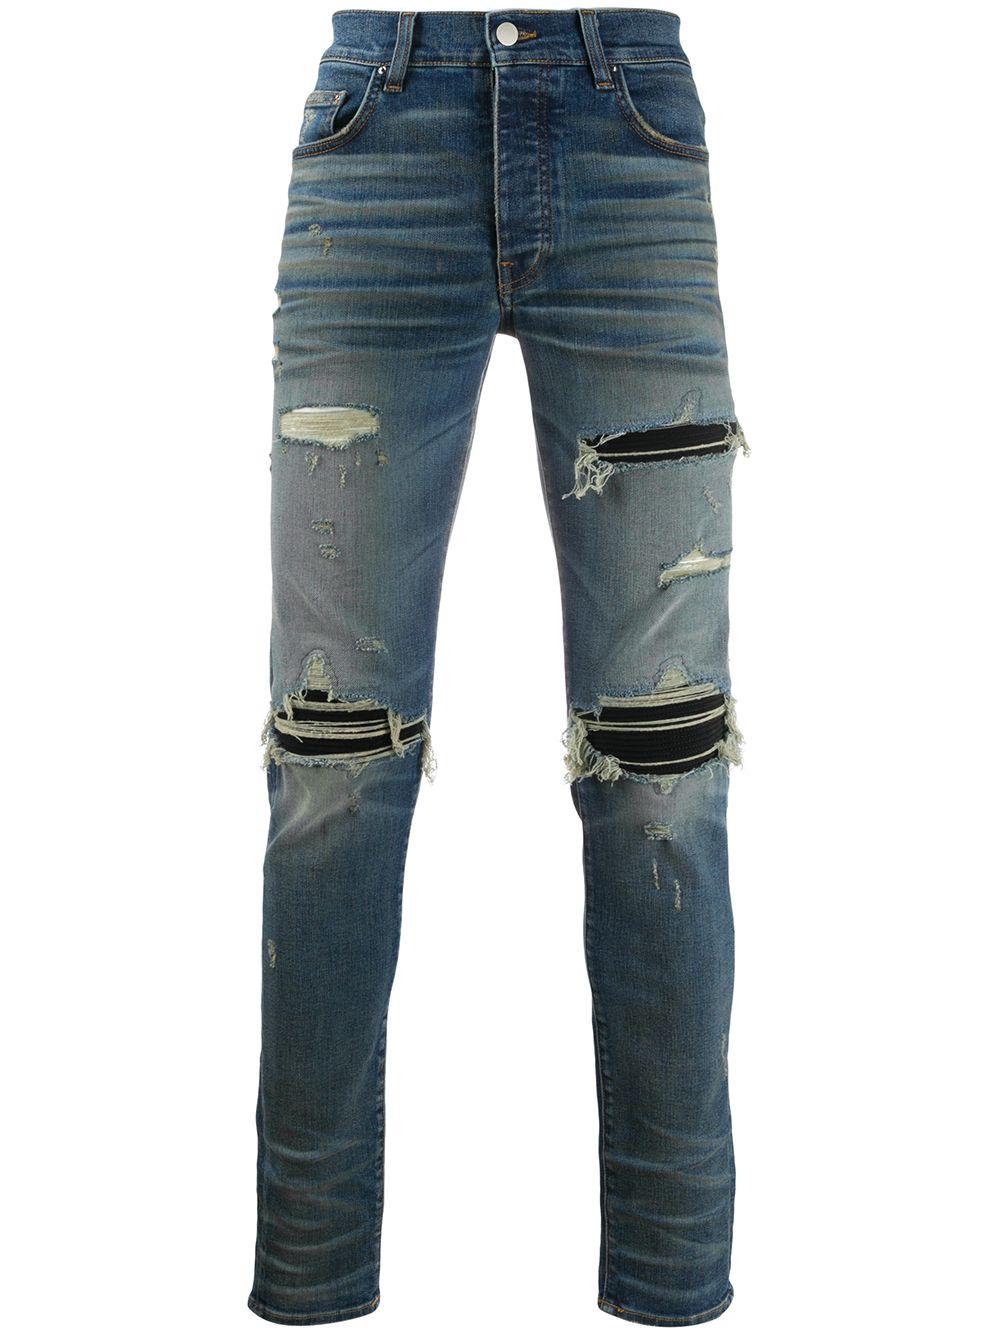 Amiri Denim Slim Fit Ripped Jeans in Blue for Men - Lyst